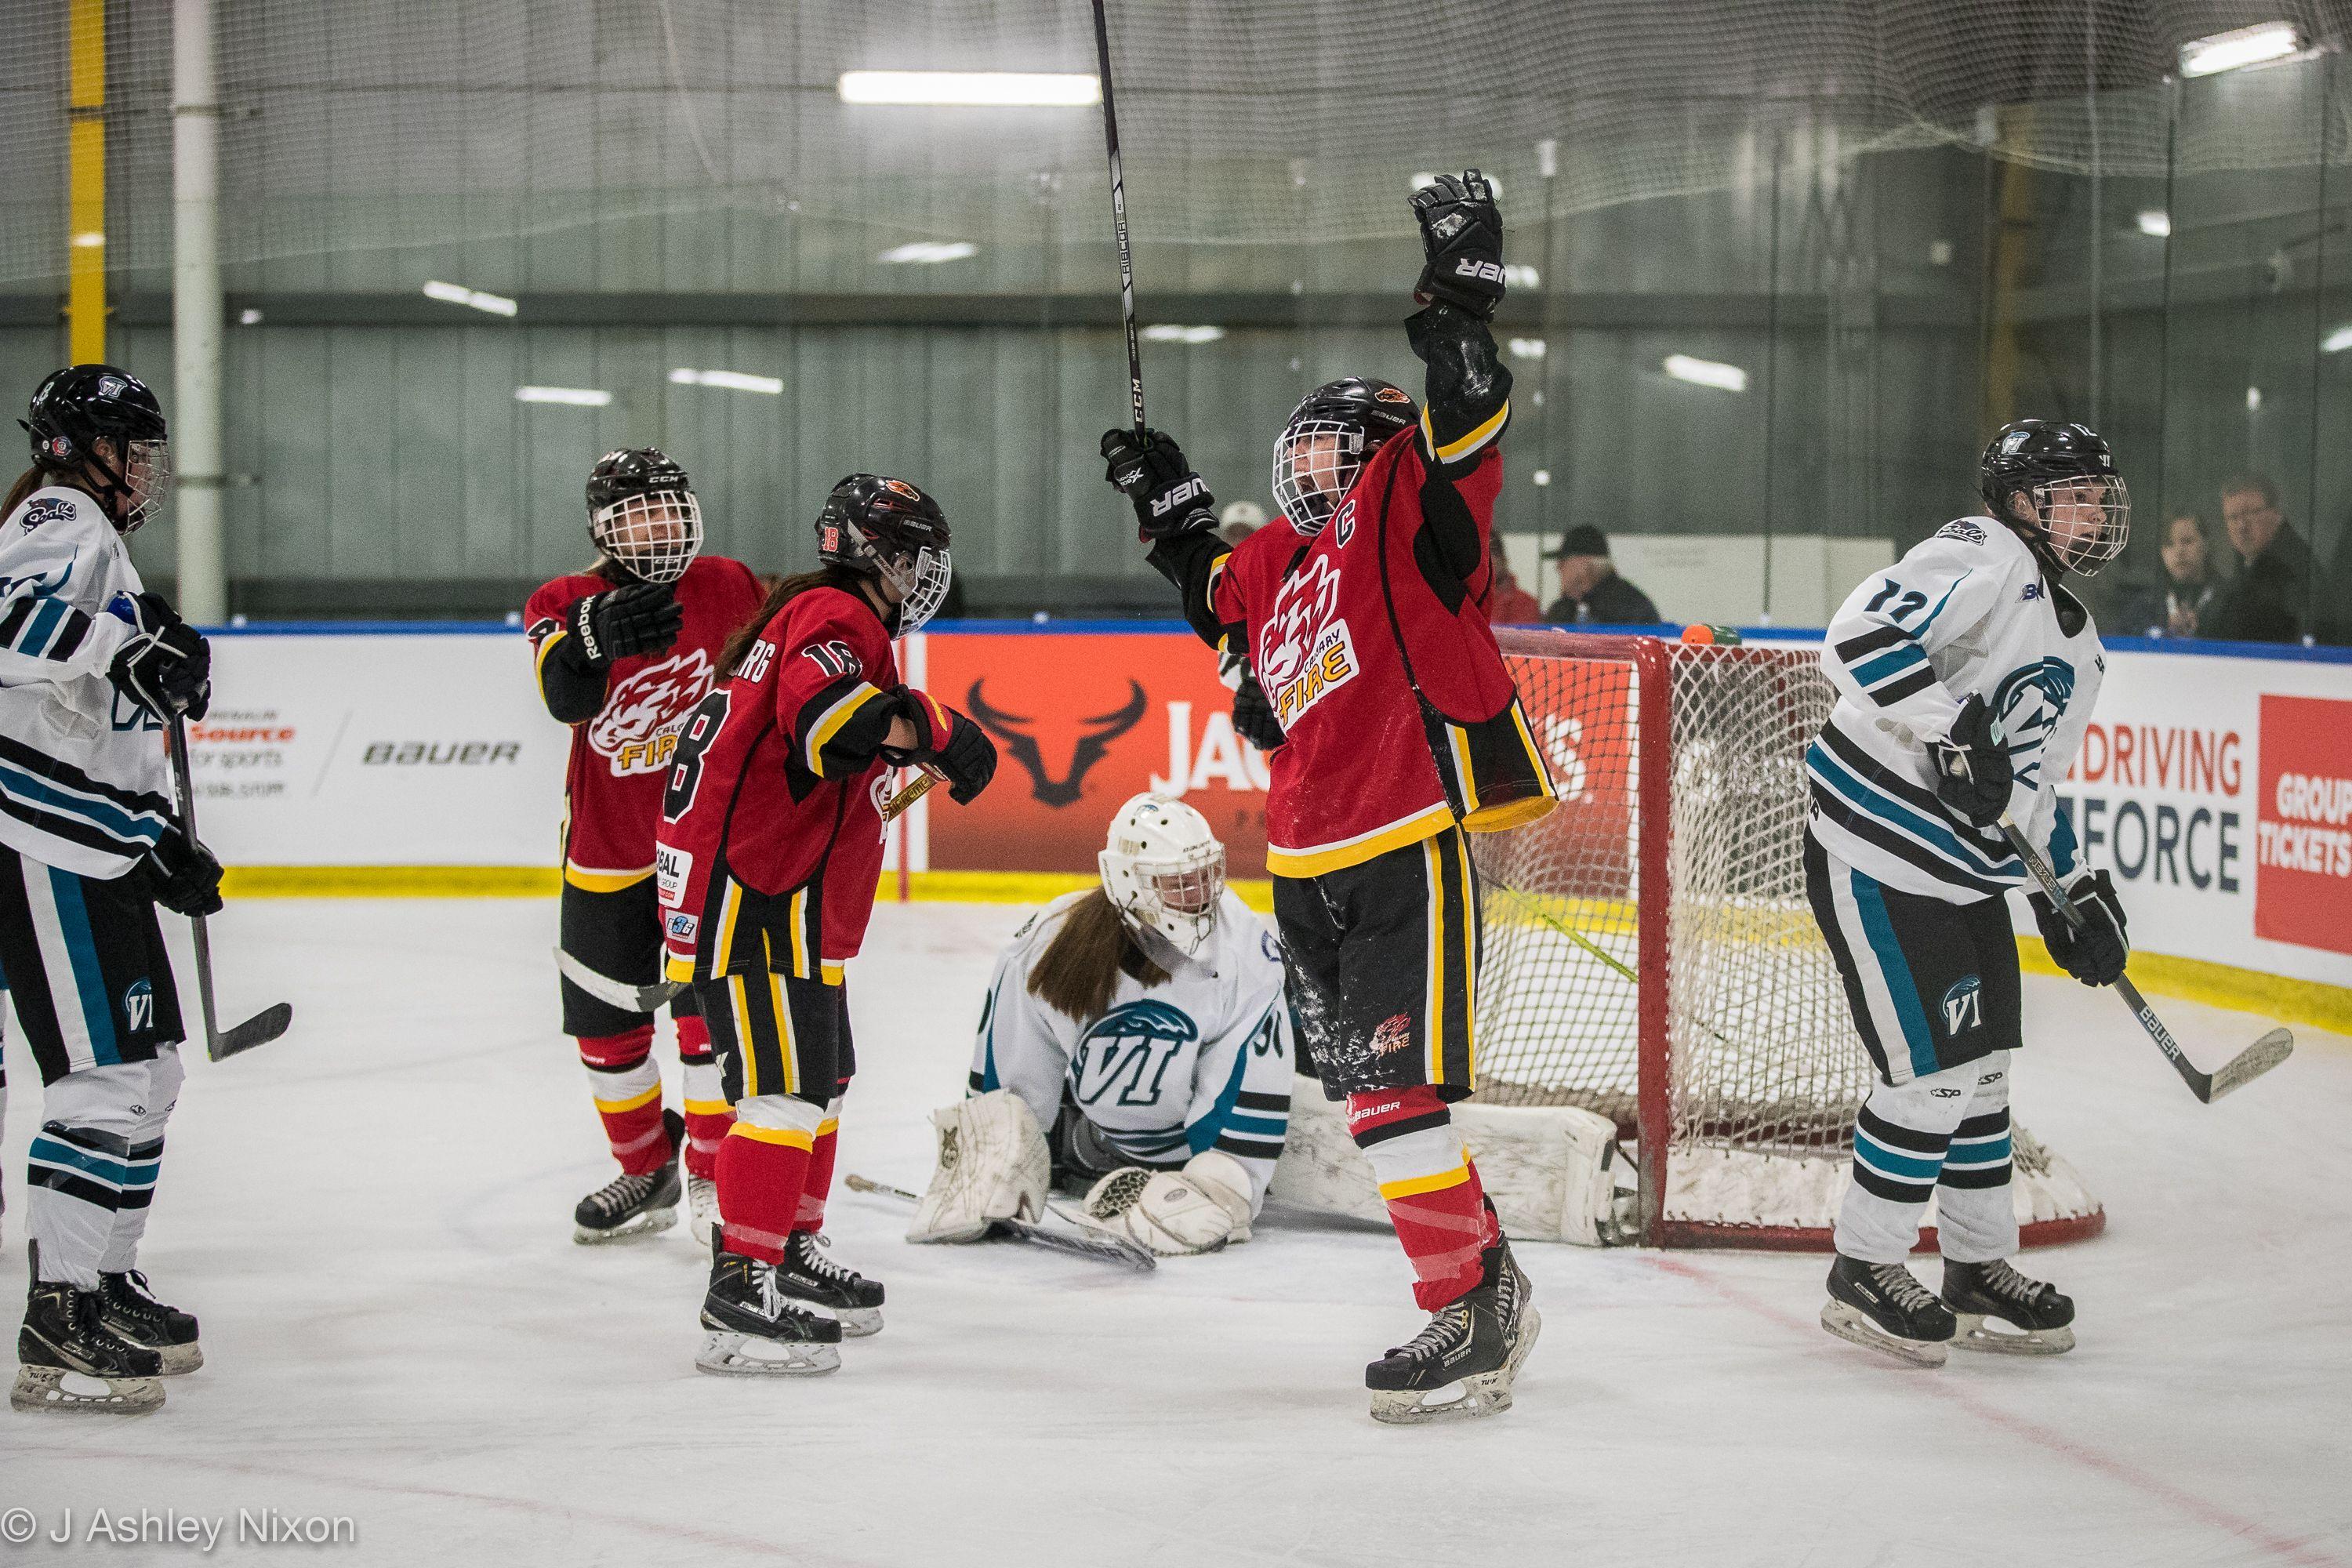 Return to hockey may depend on region - KenoraOnline 